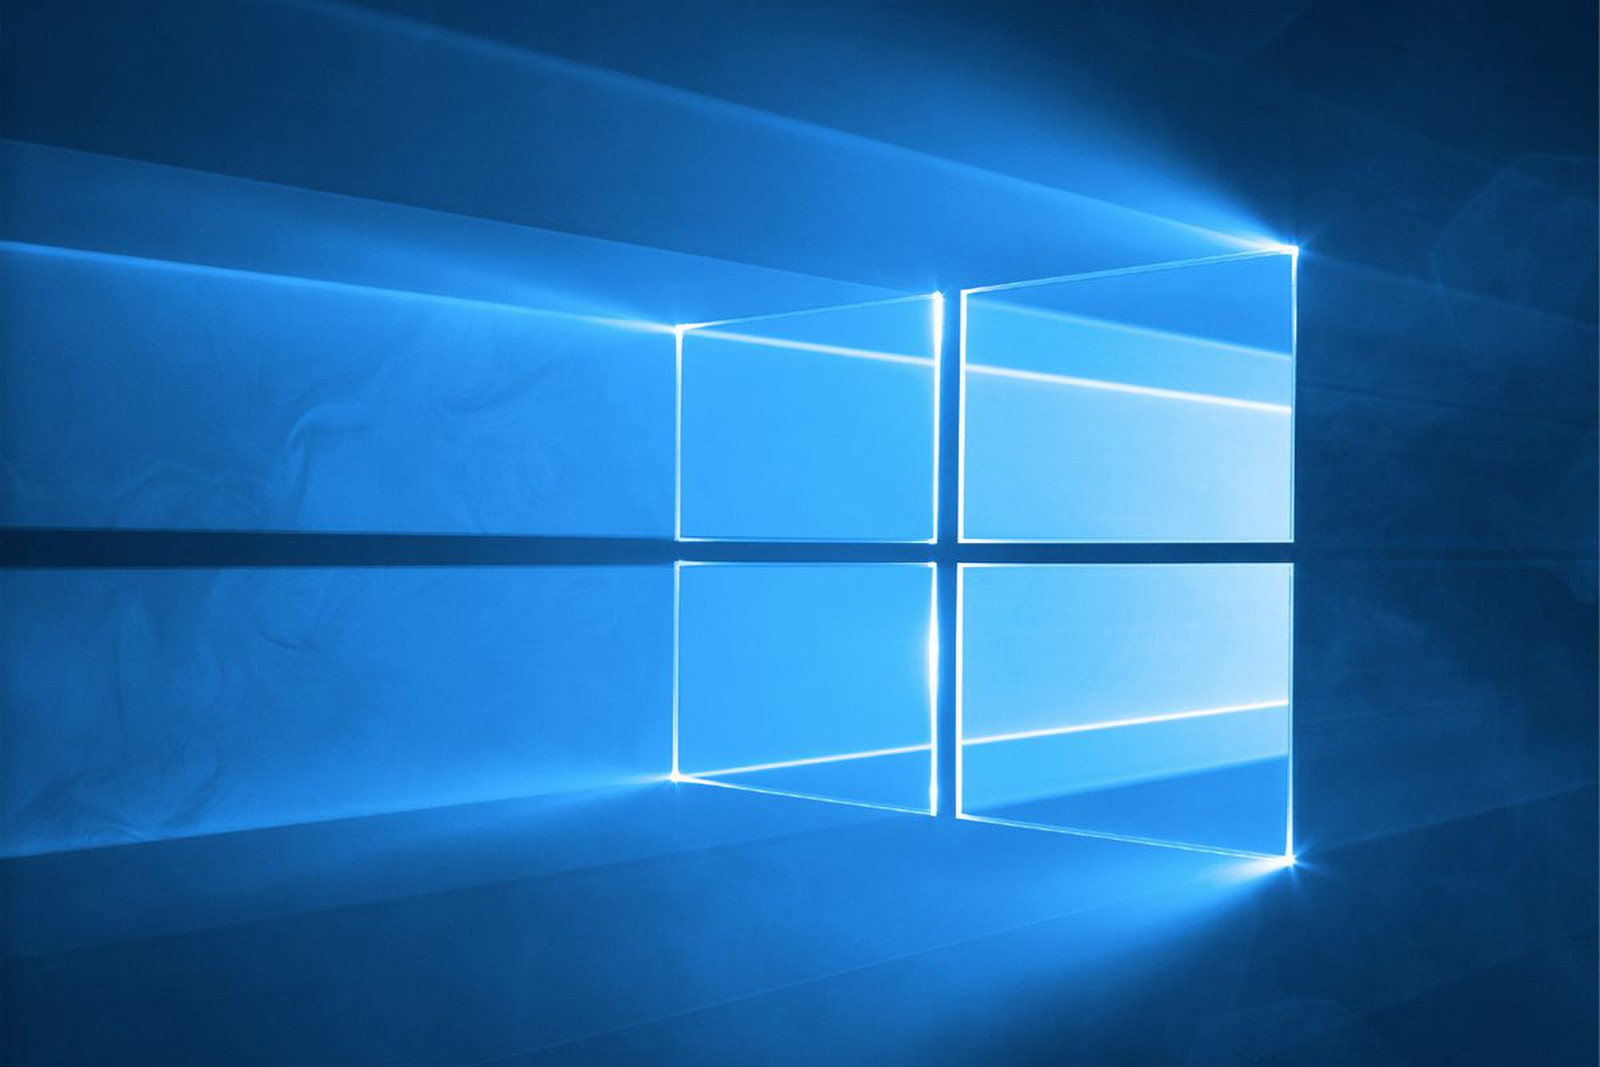 Windows 10 ltcs. Windows 10 Hero 4k. Обои на ПК. Стандартные обои Windows. Рабочий стол Windows 10.